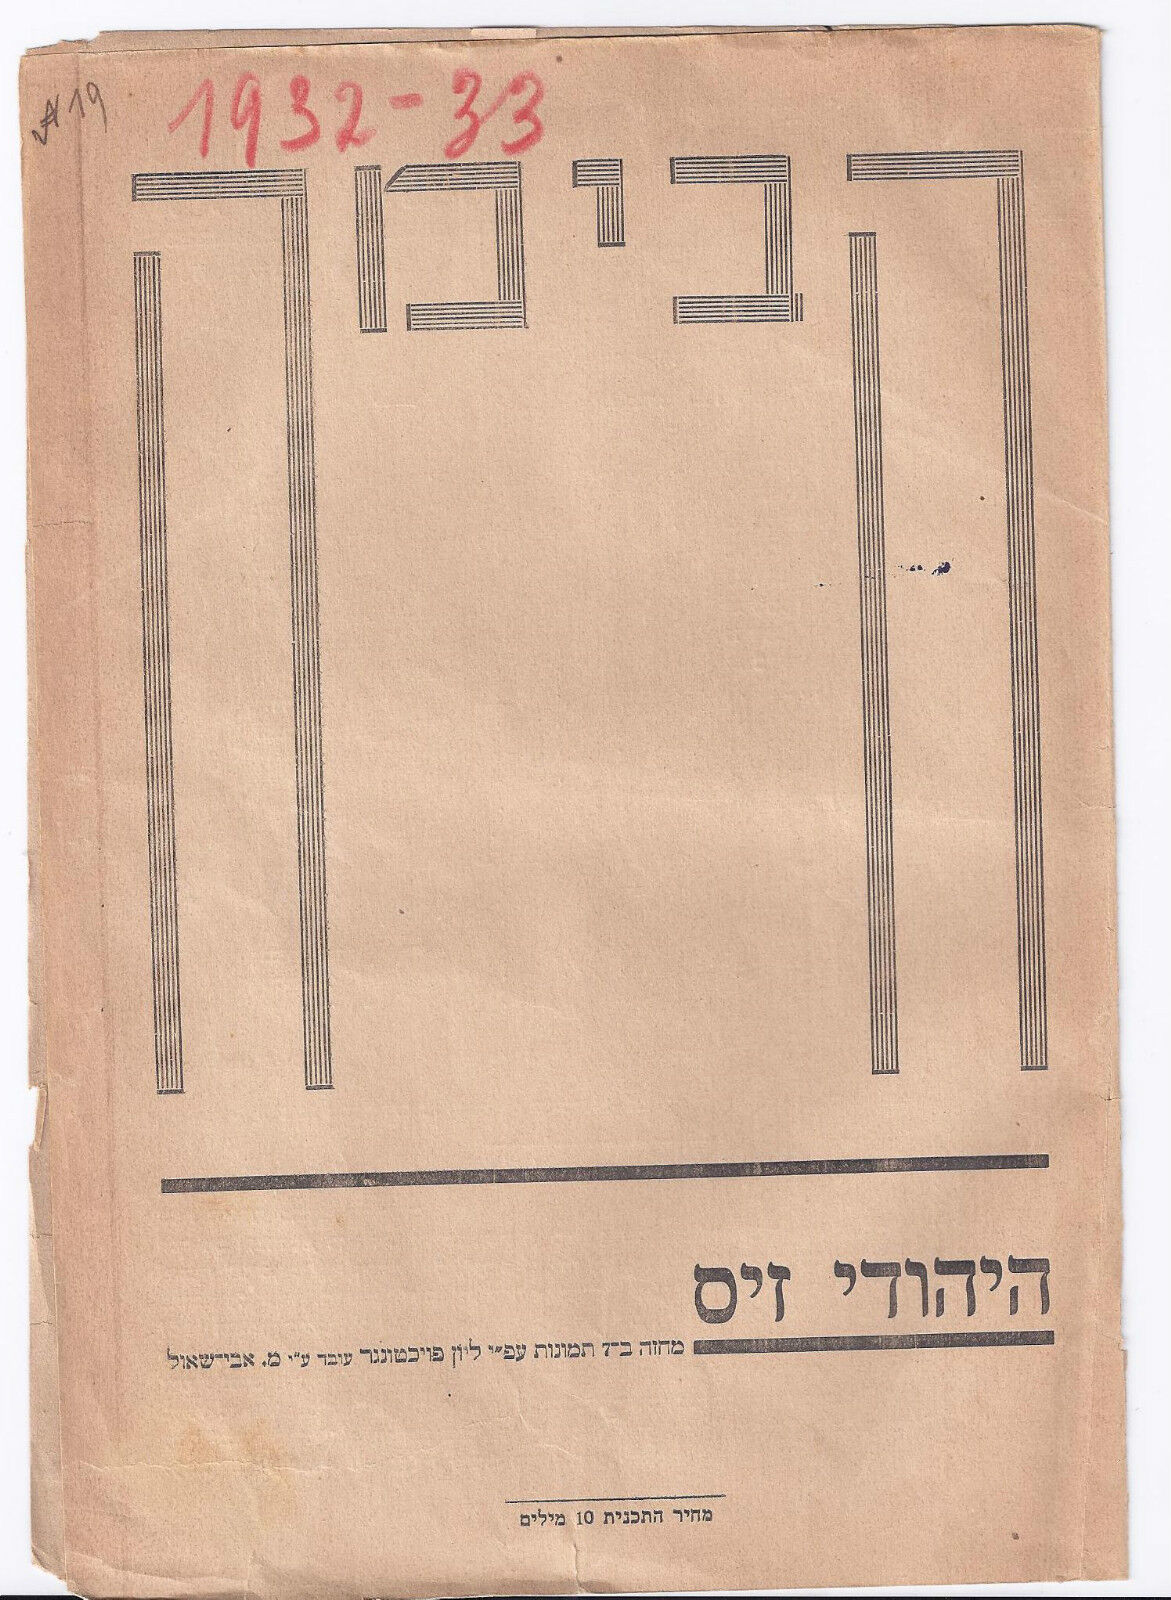 Judaica Eretz Israel Palestine Habima Theatre Jud Suss 1932 Program Rare israeli